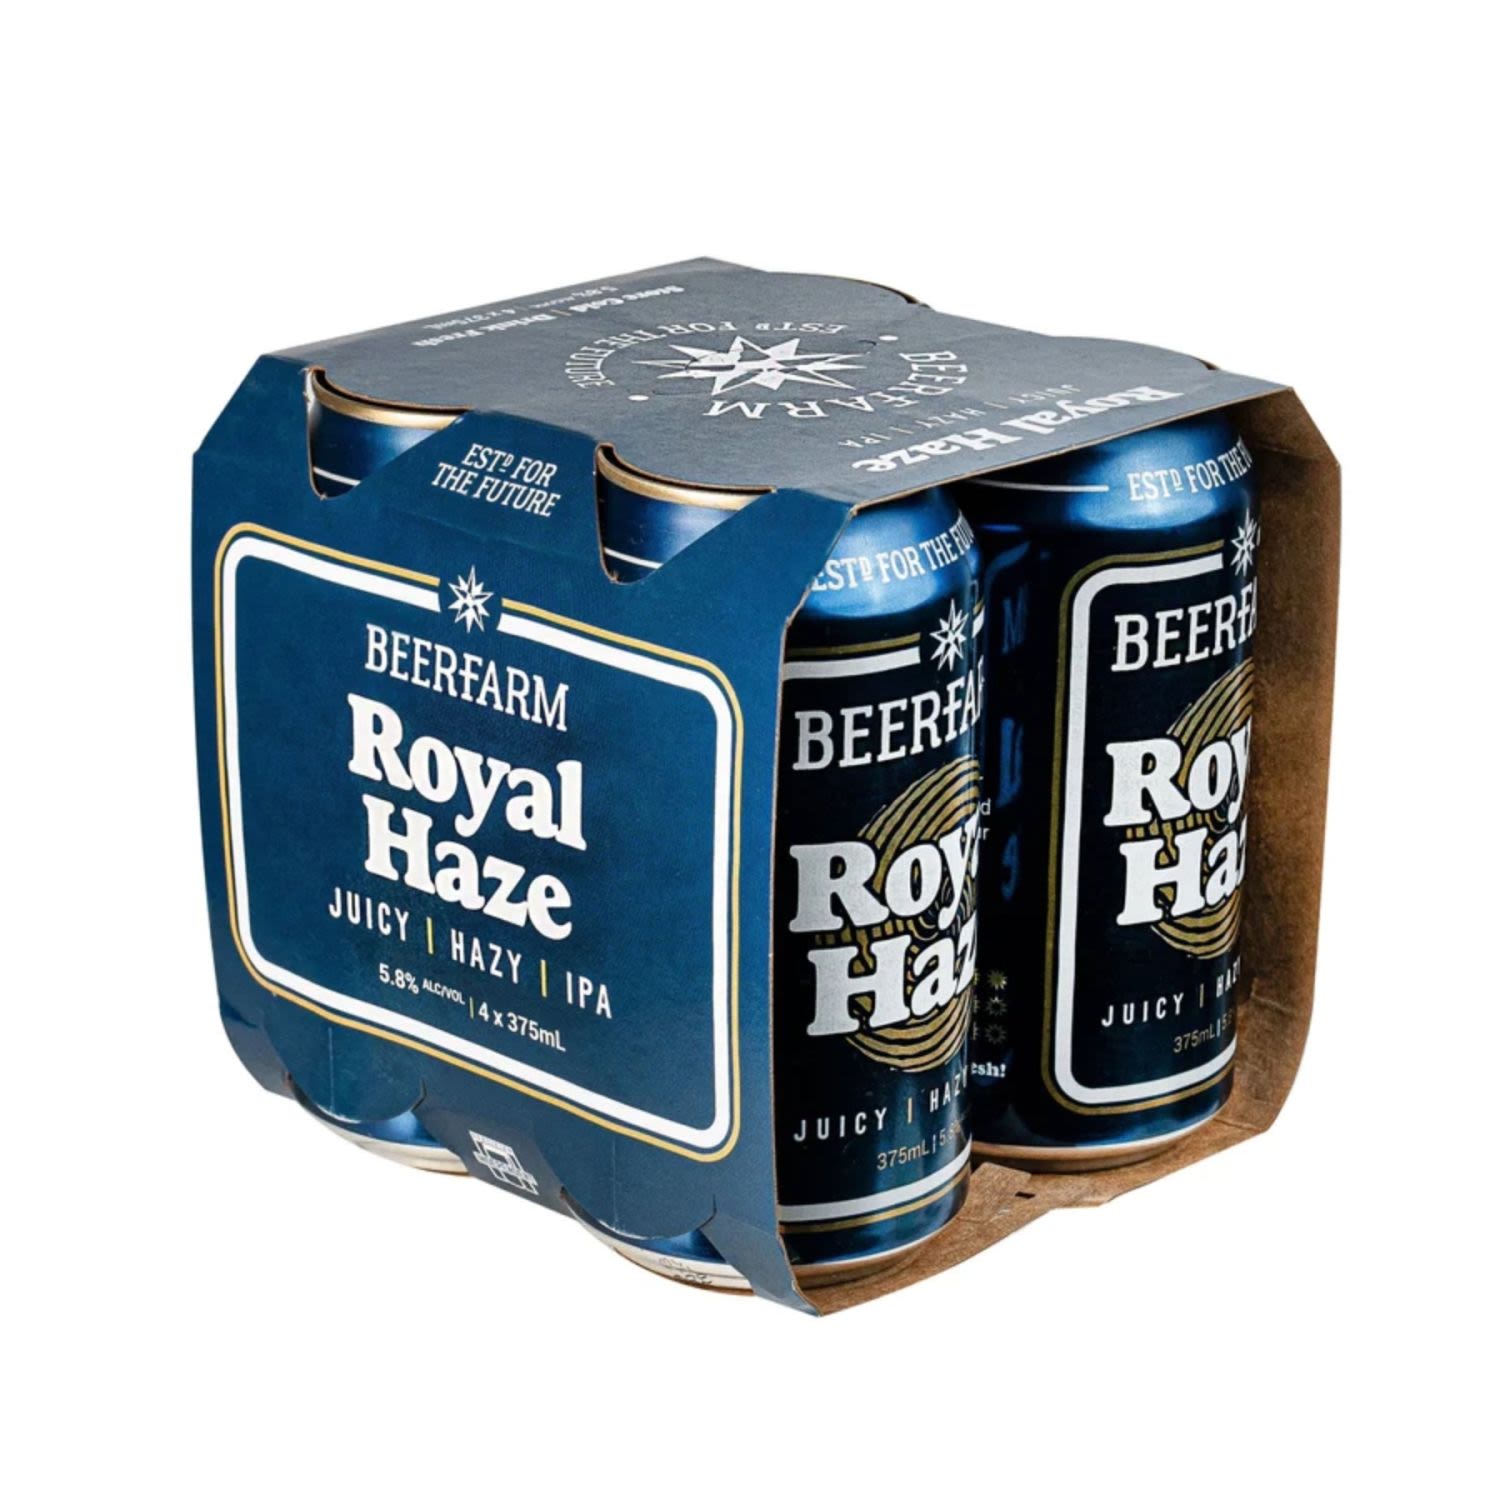 Beerfarm Royal haze IPA Can 375ml 4 Pack